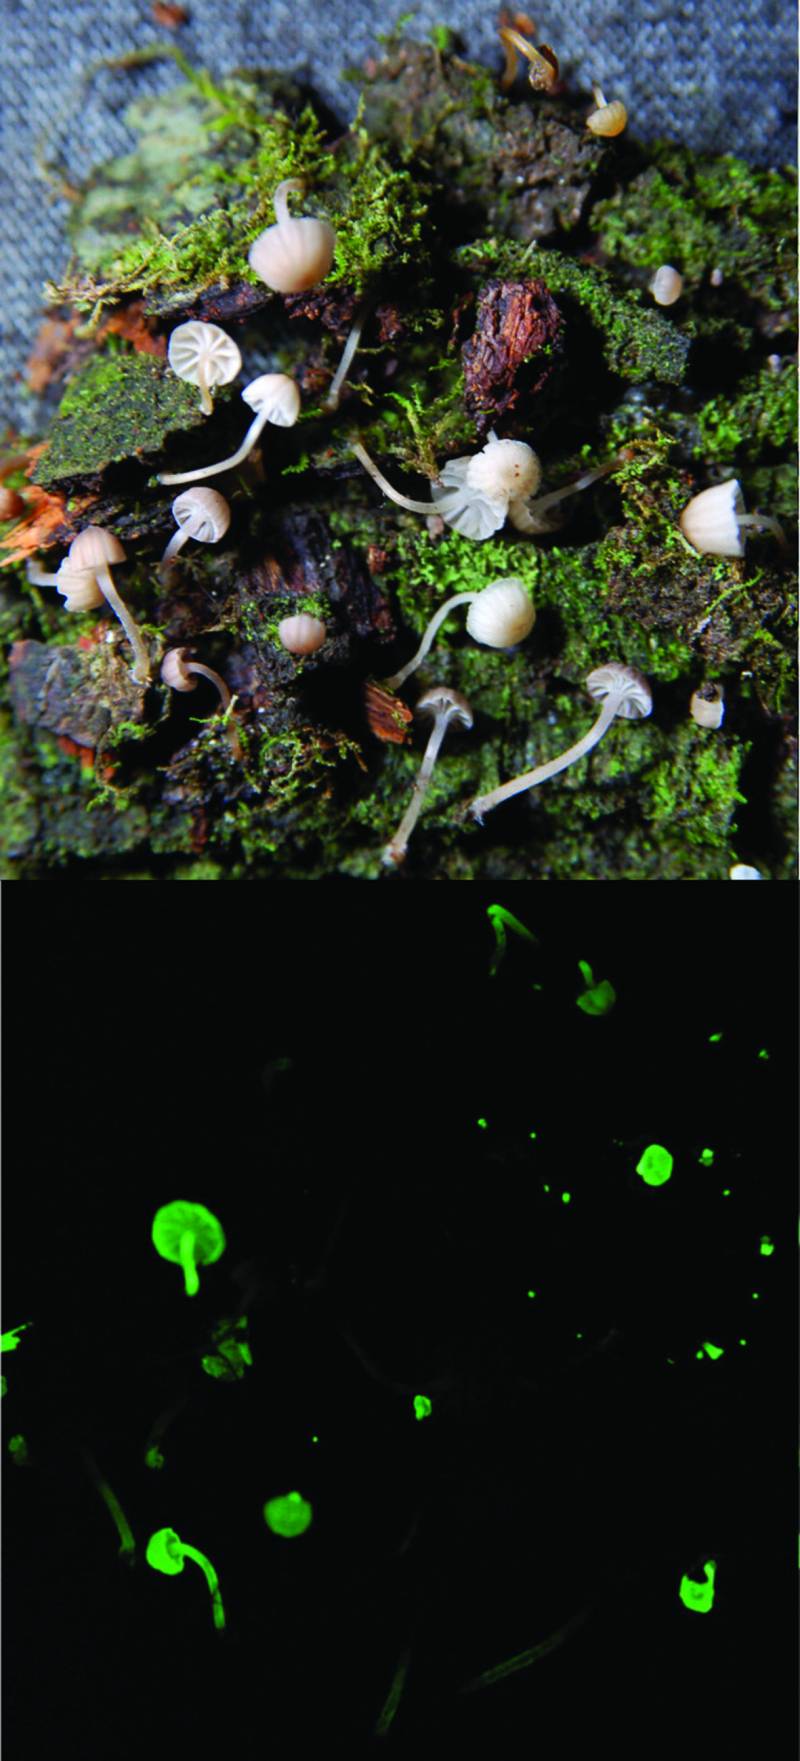 Descubren siete nuevas especies de hongos luminiscentes